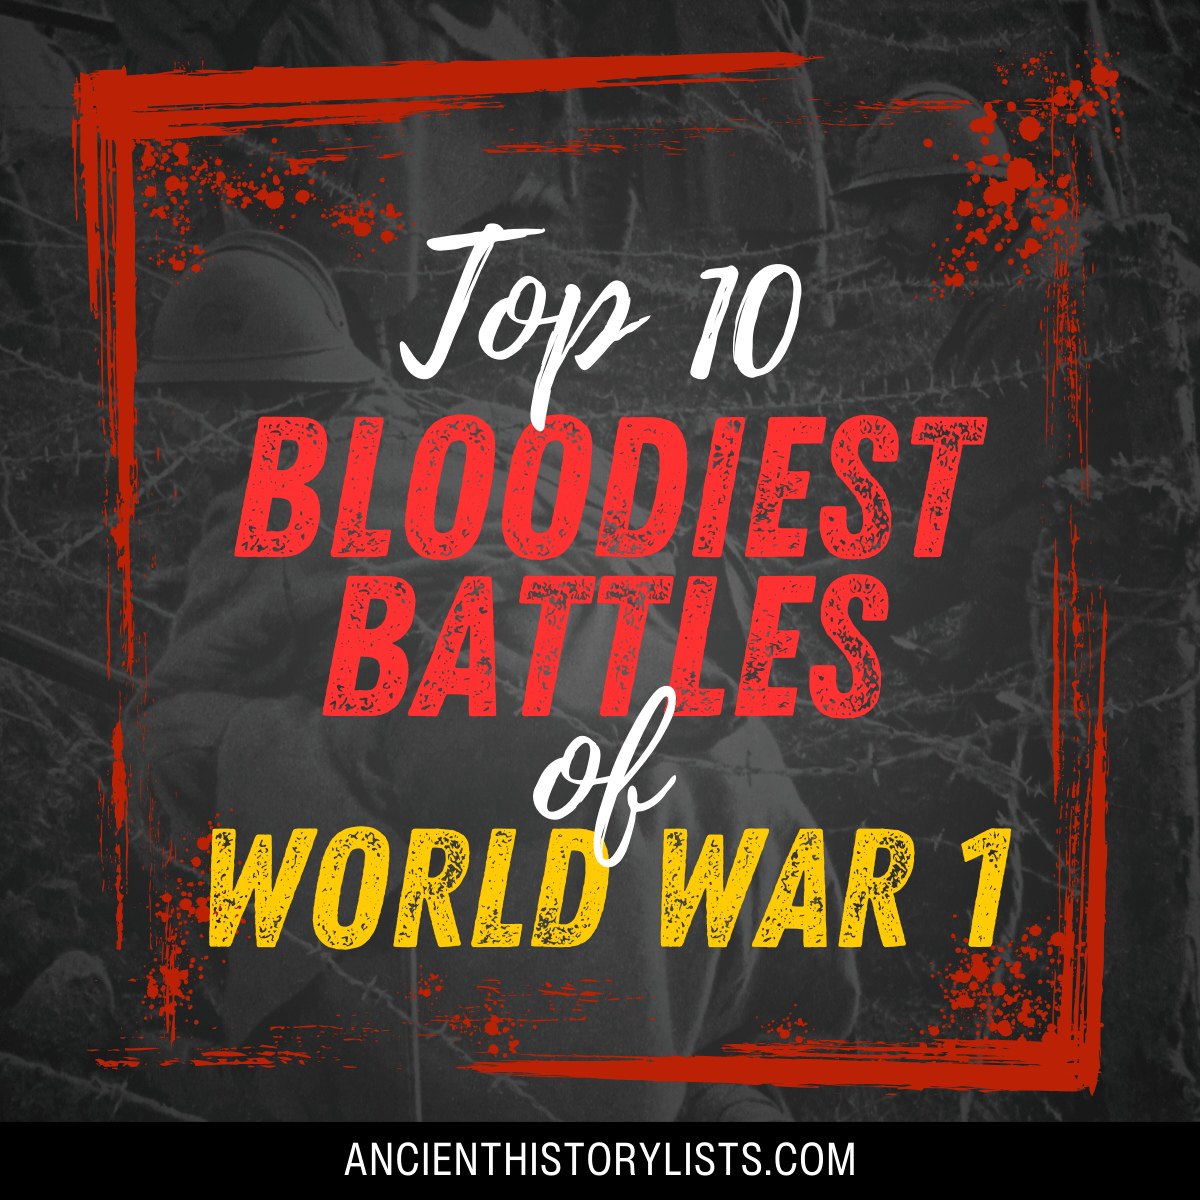 Bloodiest Battles of World War 1